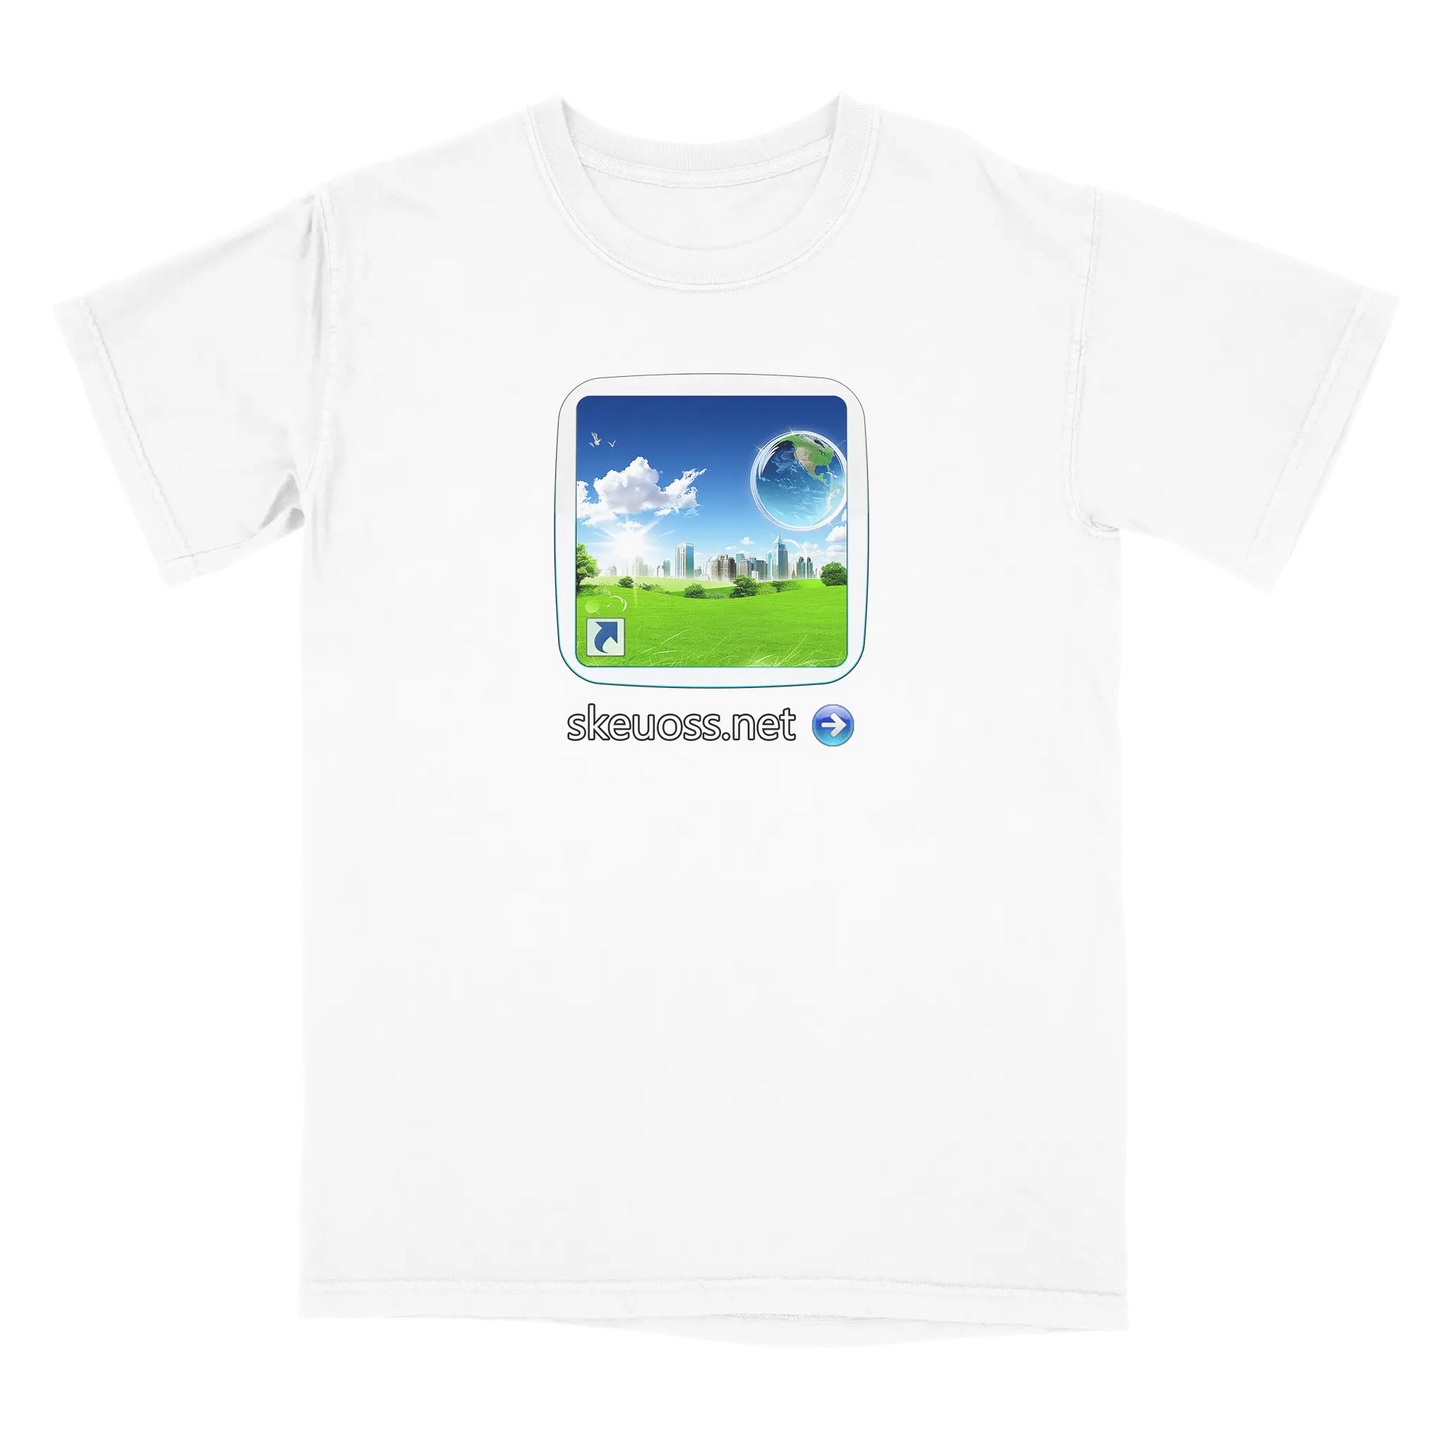 Frutiger Aero T-shirt - User Login Collection - User 367